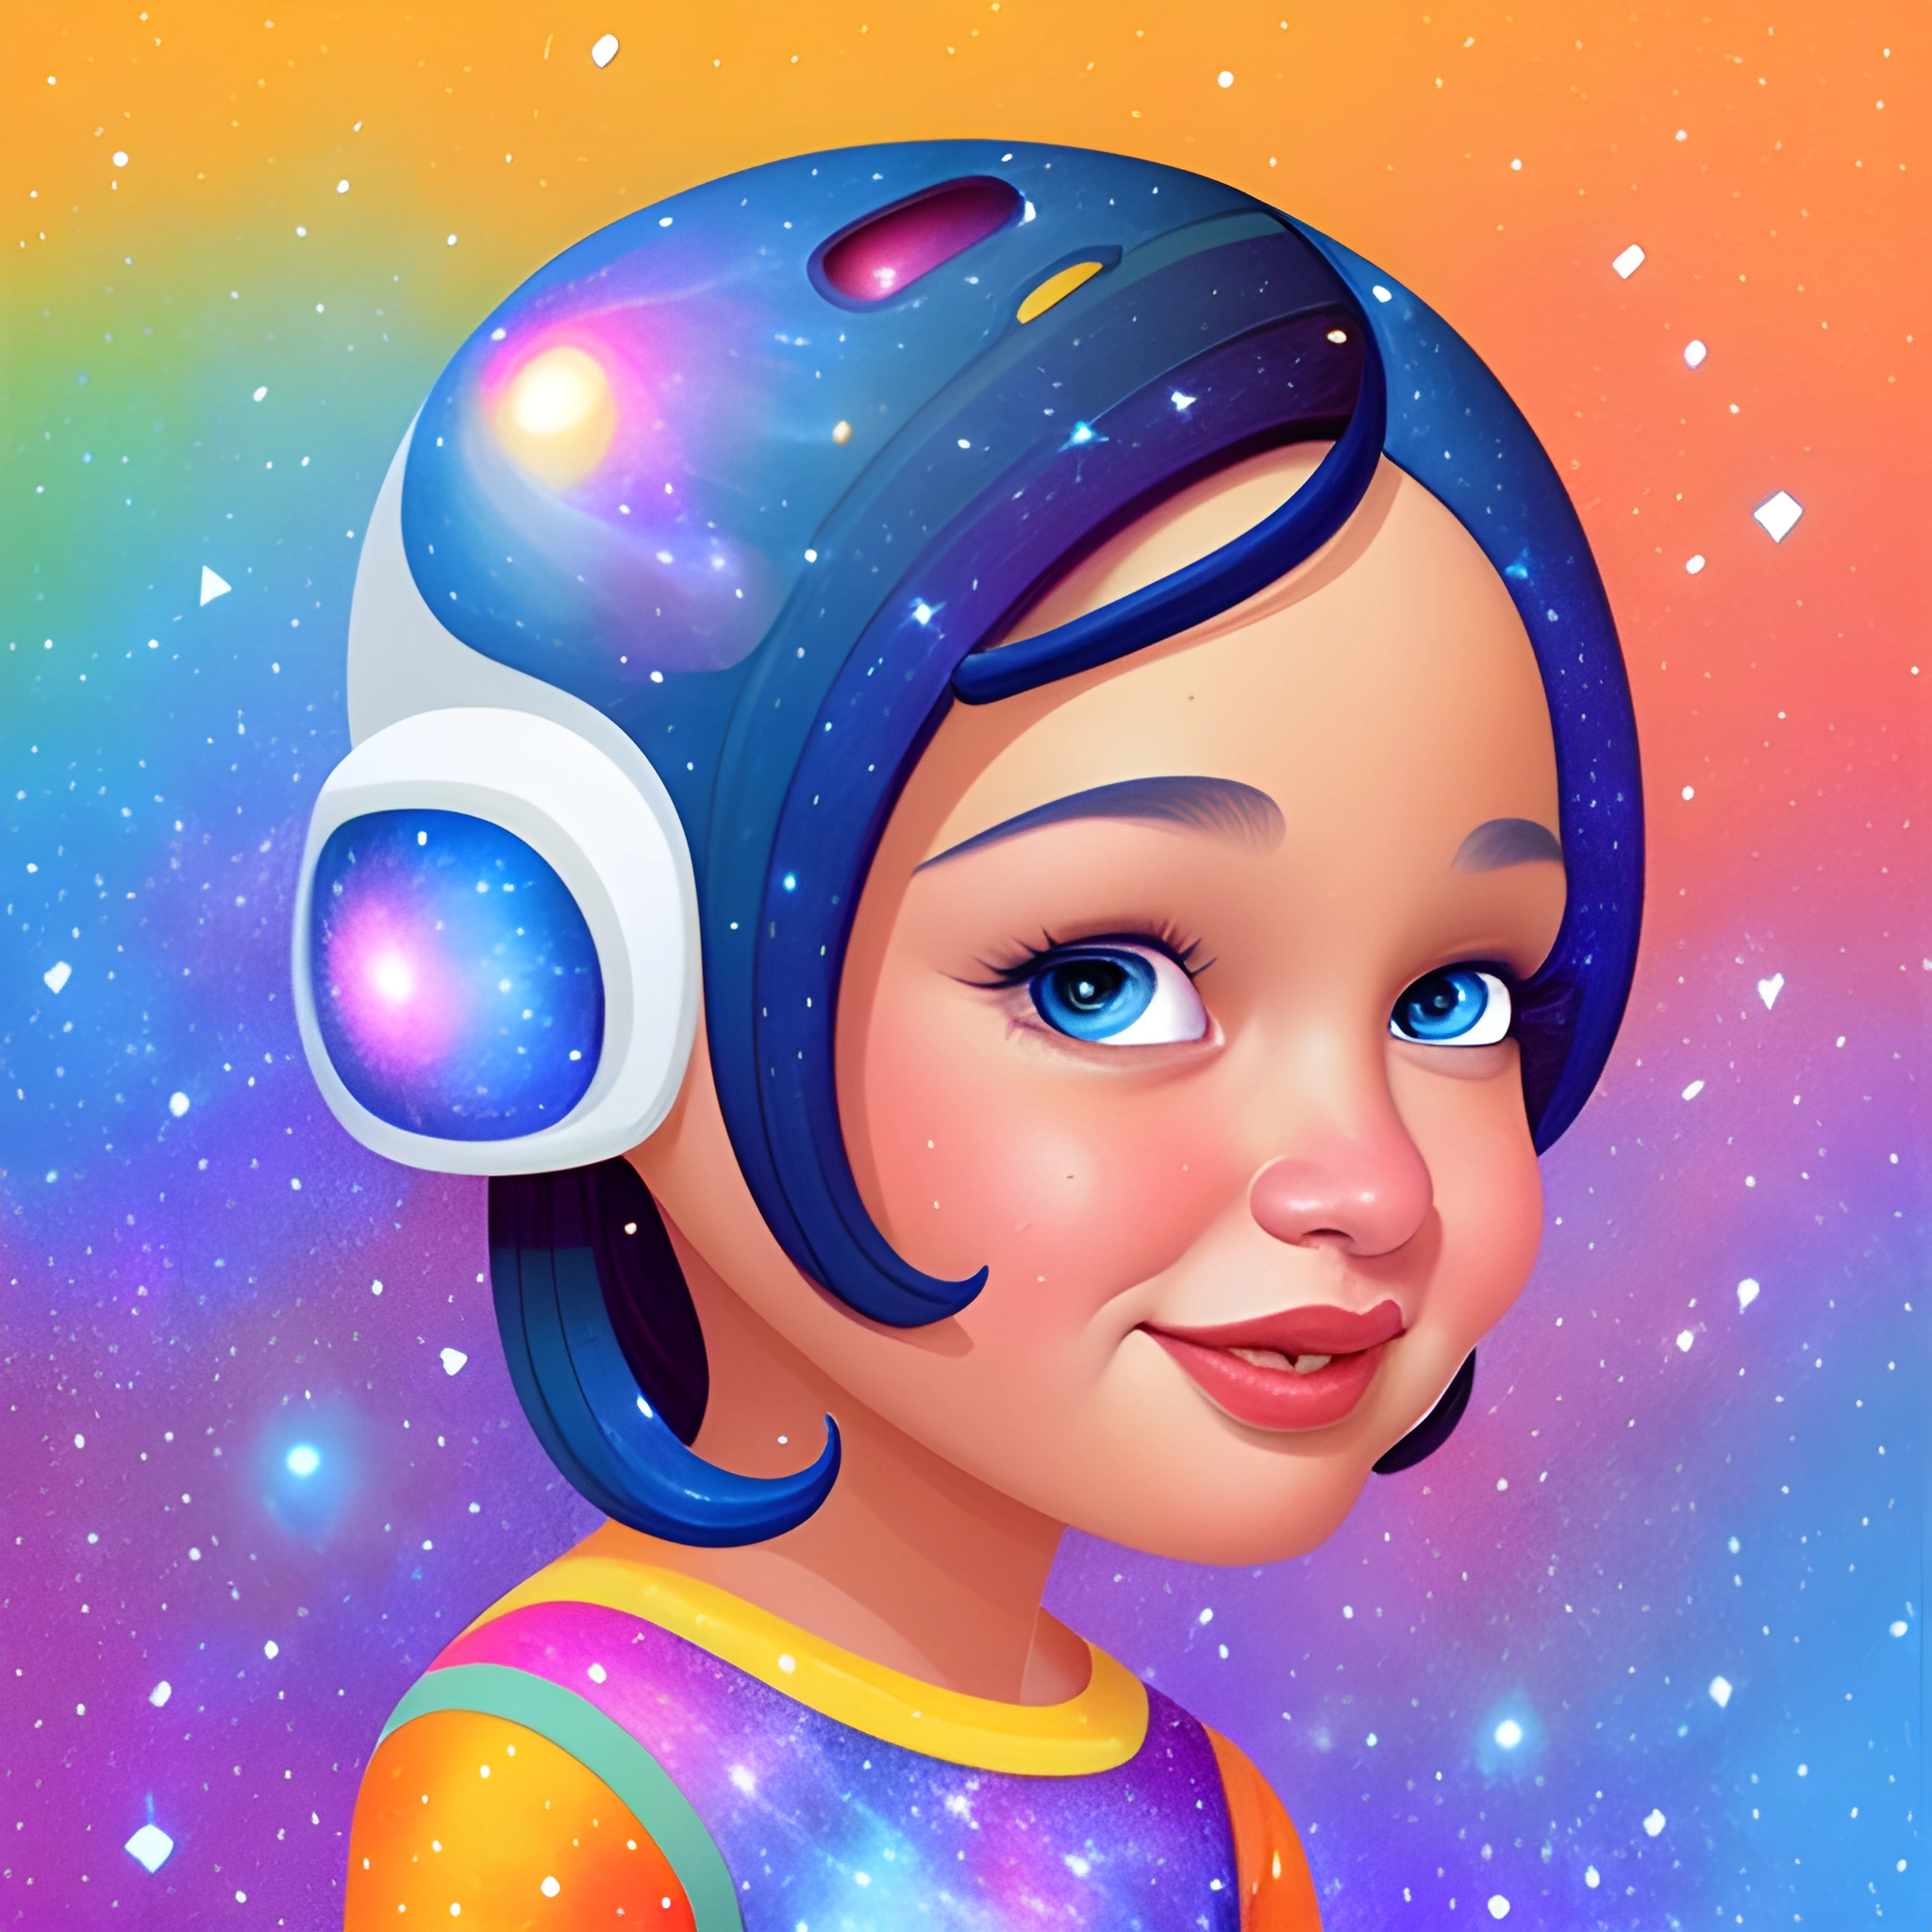 cartoon girl with headphones and a space helmet on